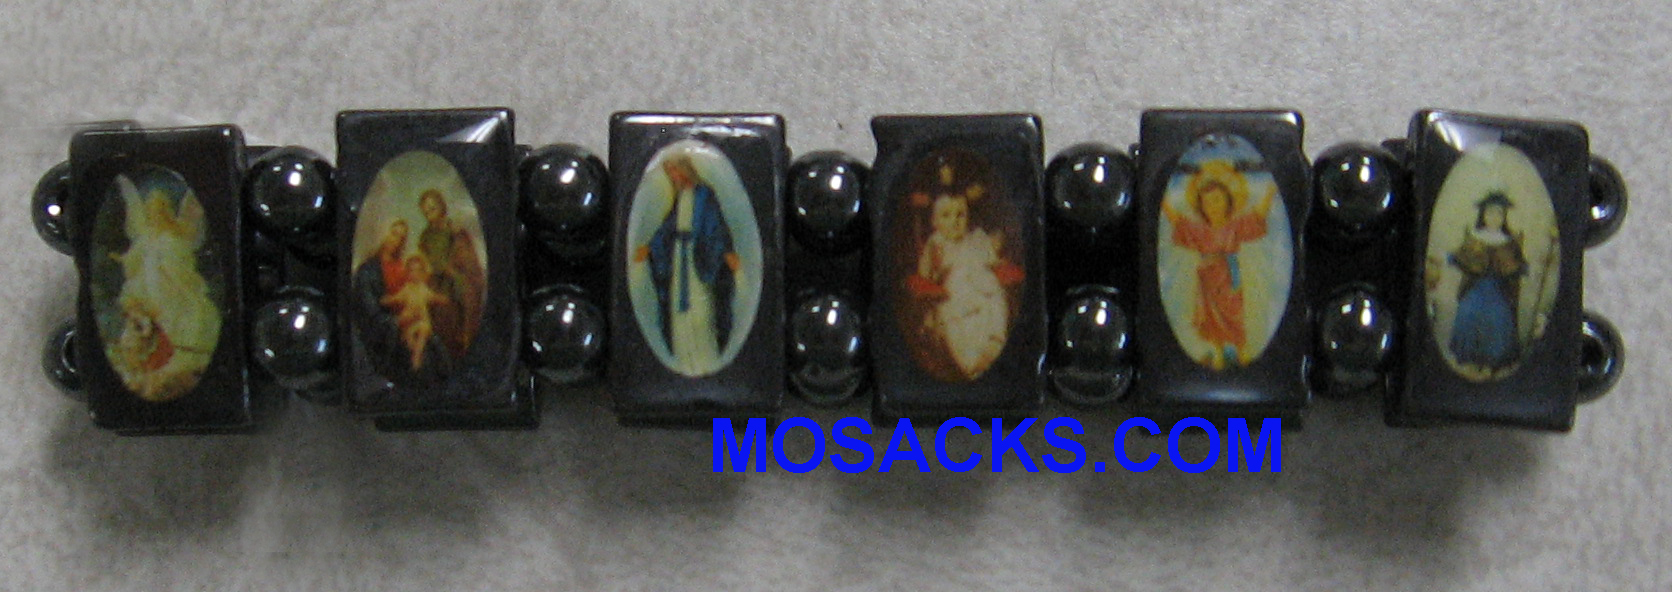 Hematite Black Saints Bracelet 08530